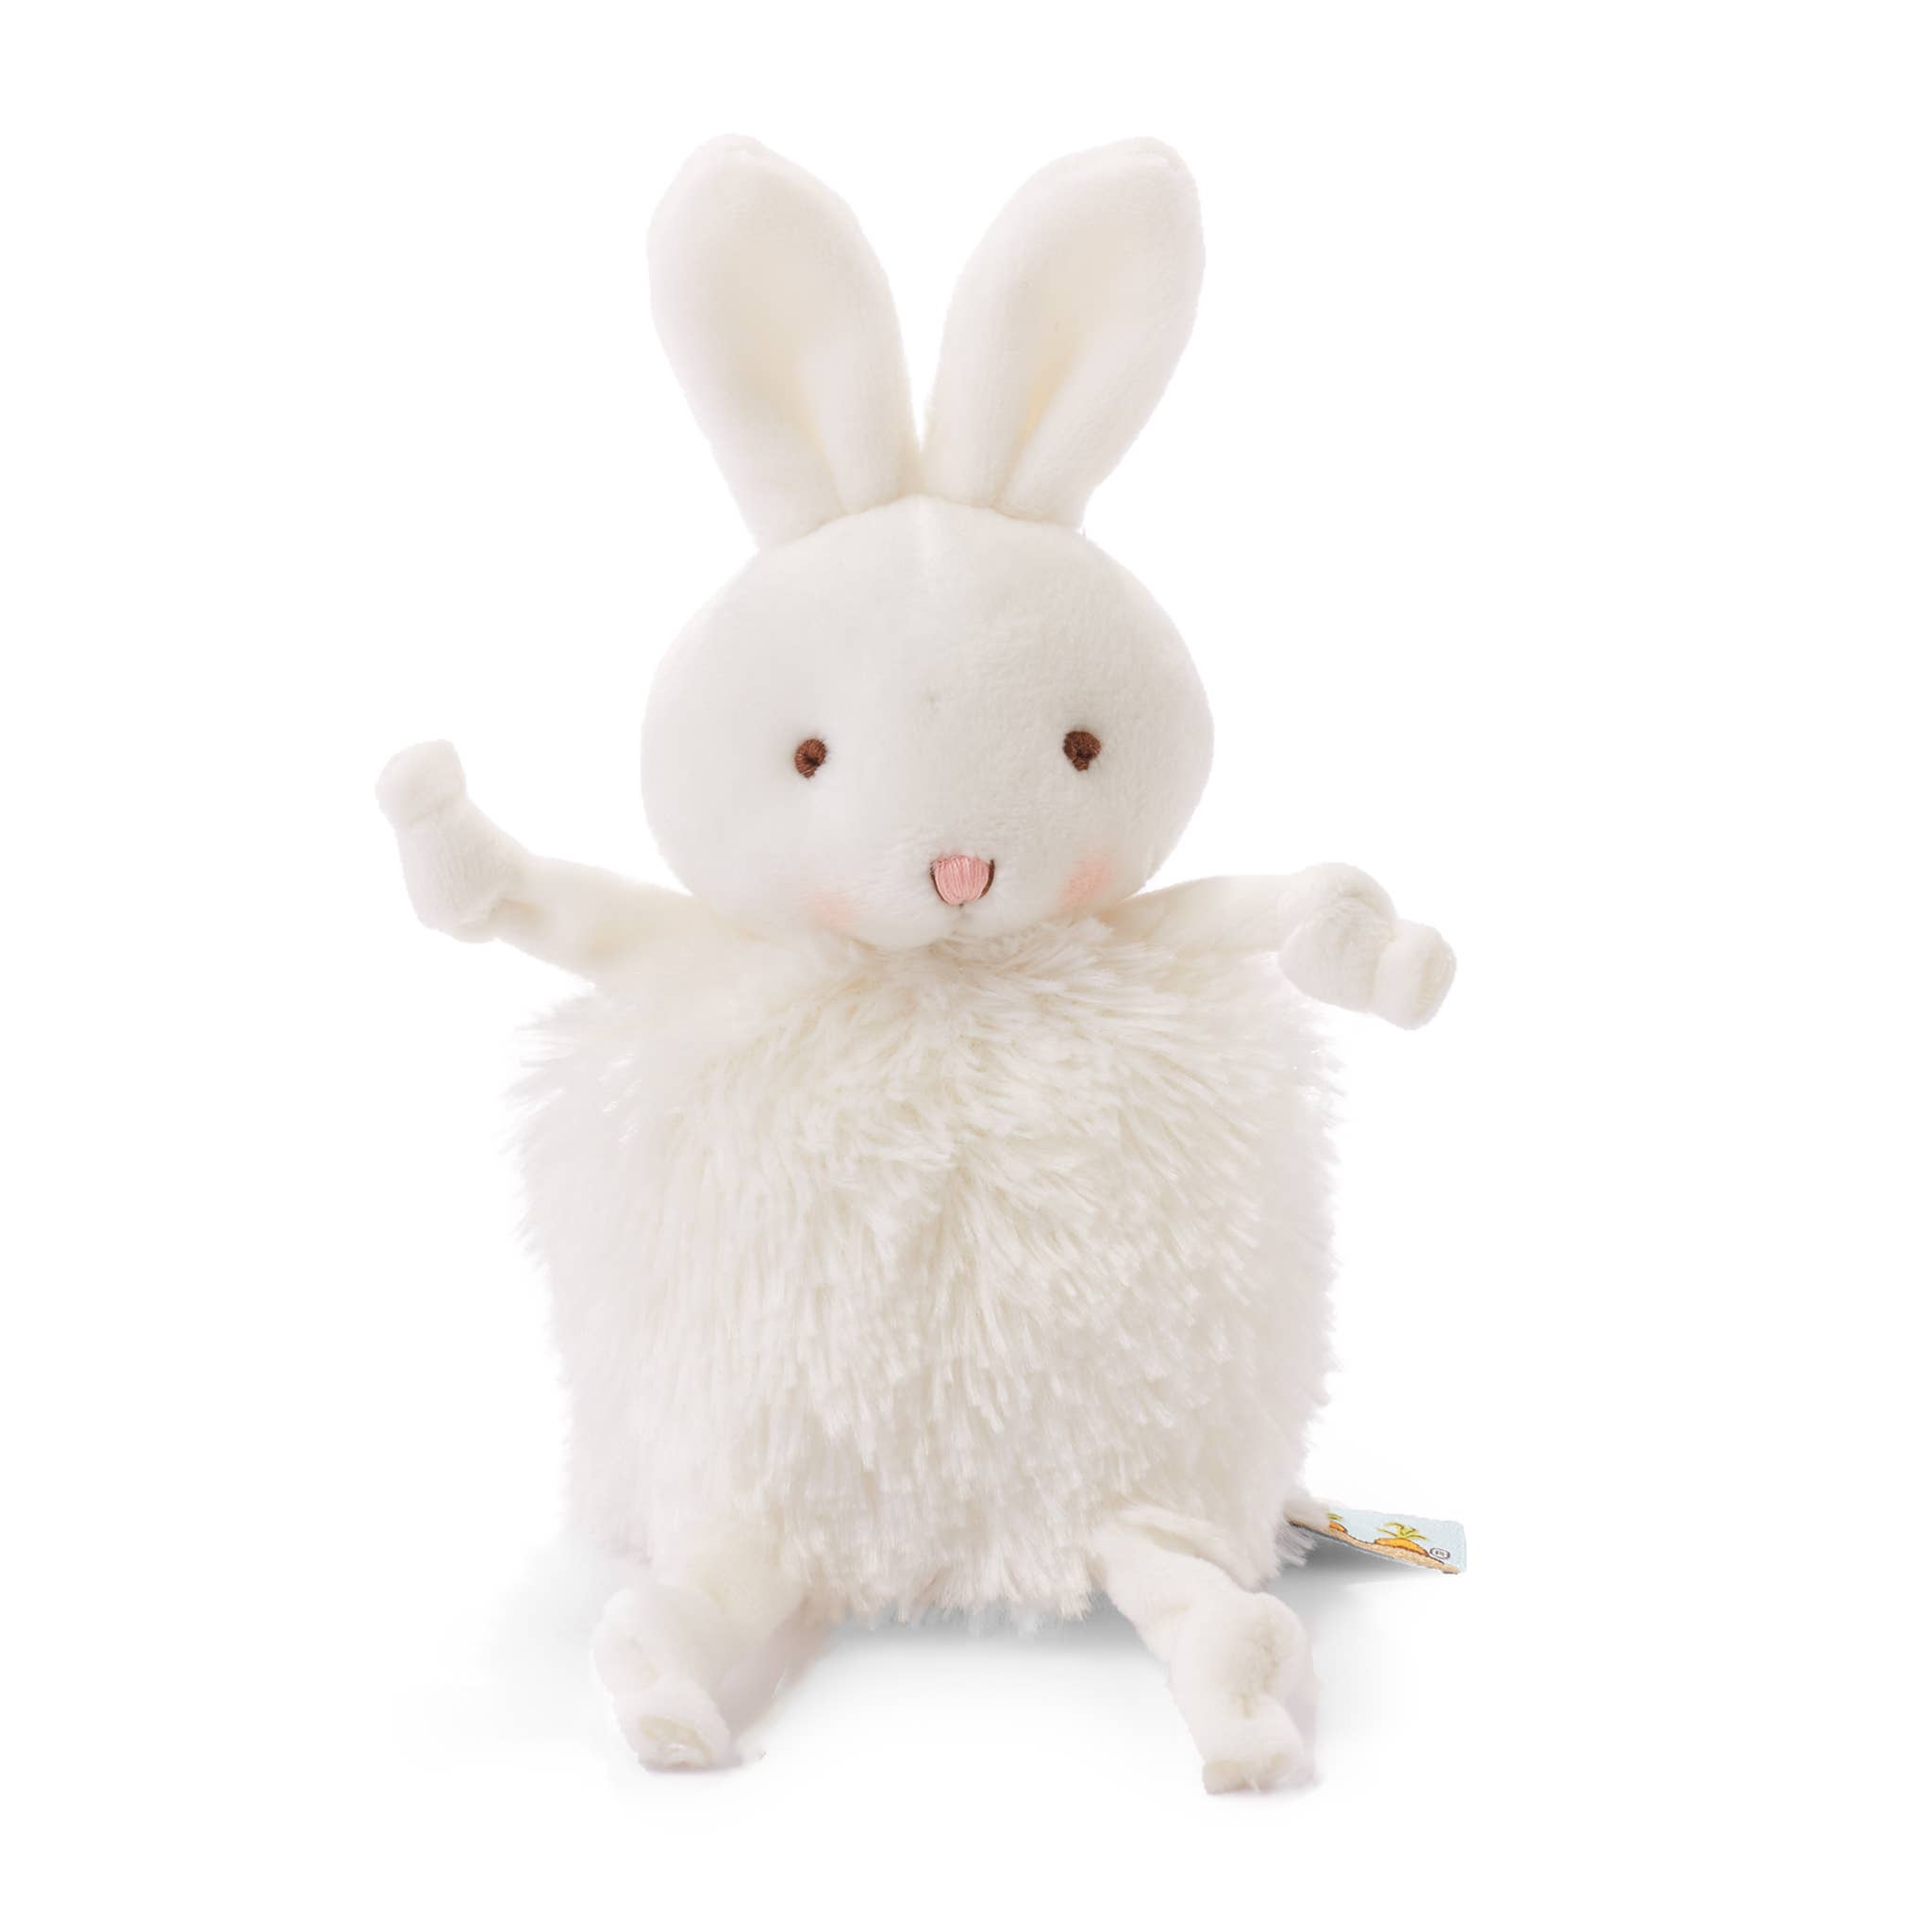 Stuffed Animal Plush, Roly Poly Bun Bun Bunny